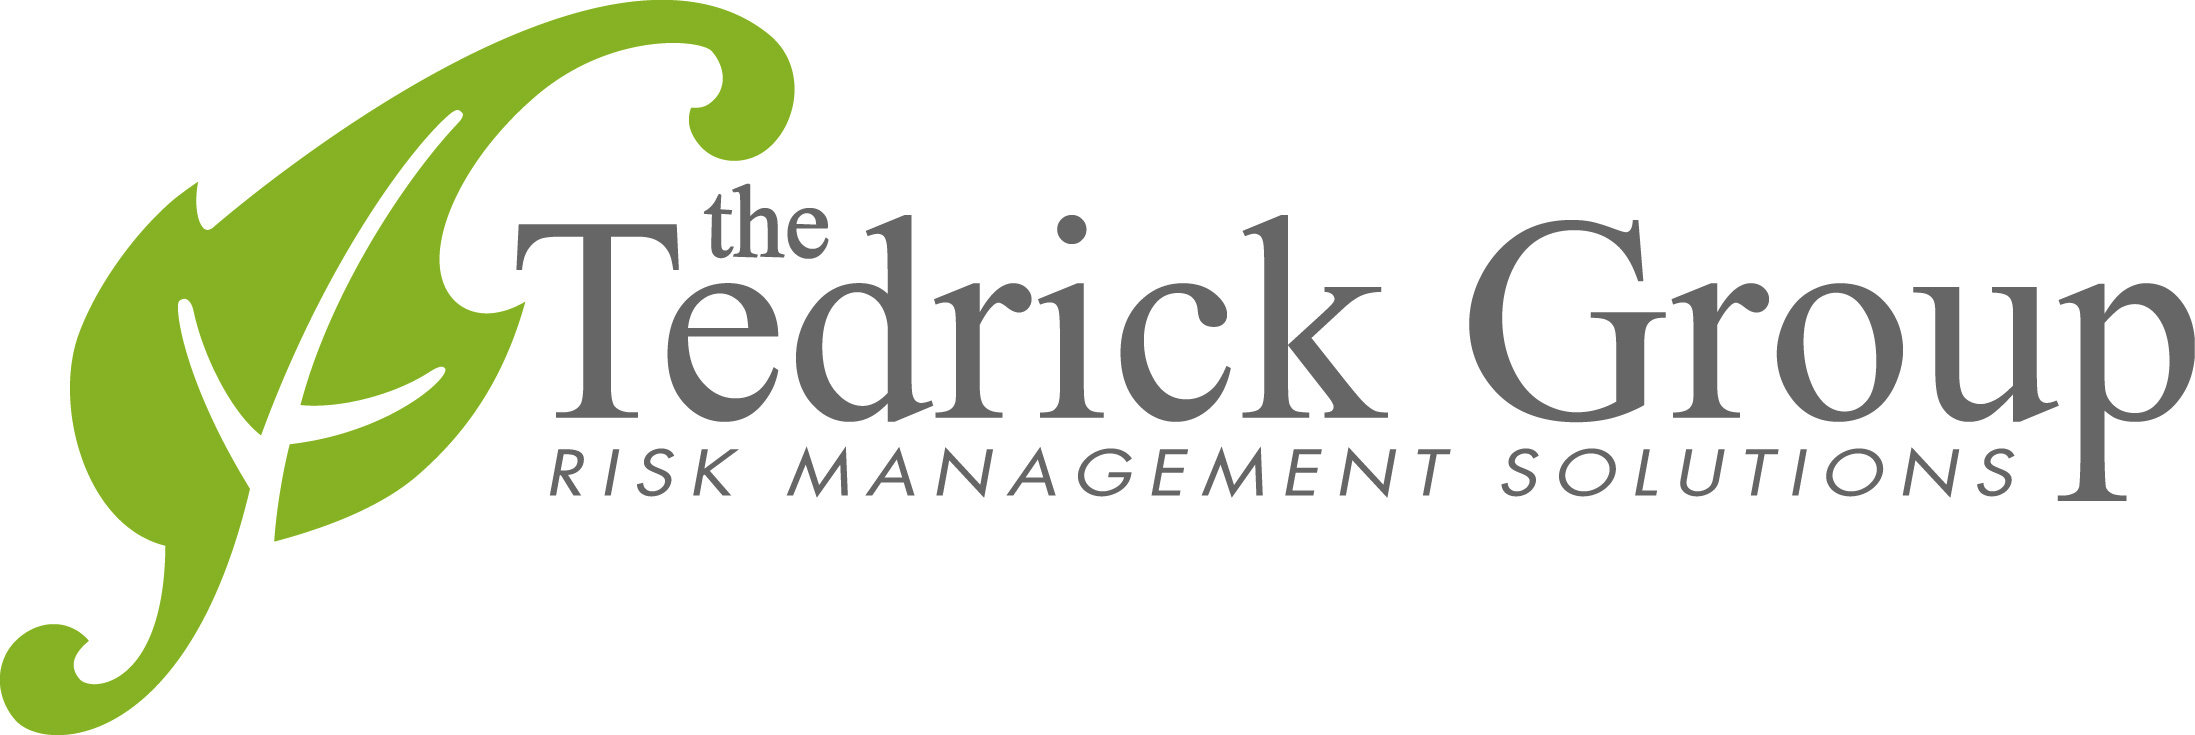 the Tedrick Group